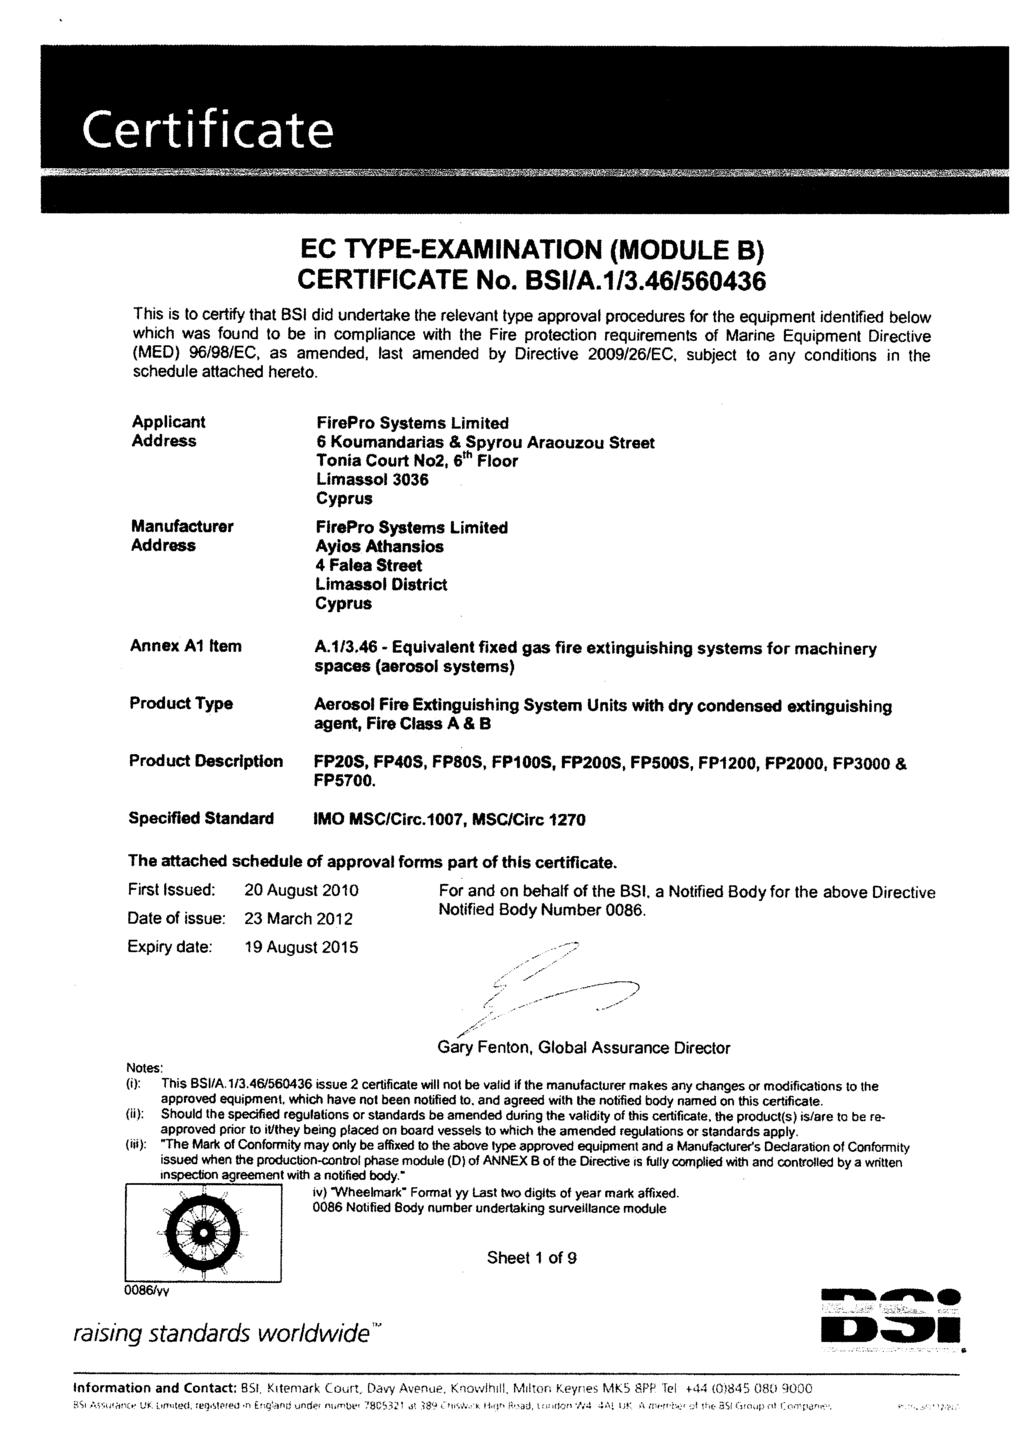 EC TYPE-EXAMINATION (MODULE B) CERTIFICATE No. BSI/A./3.